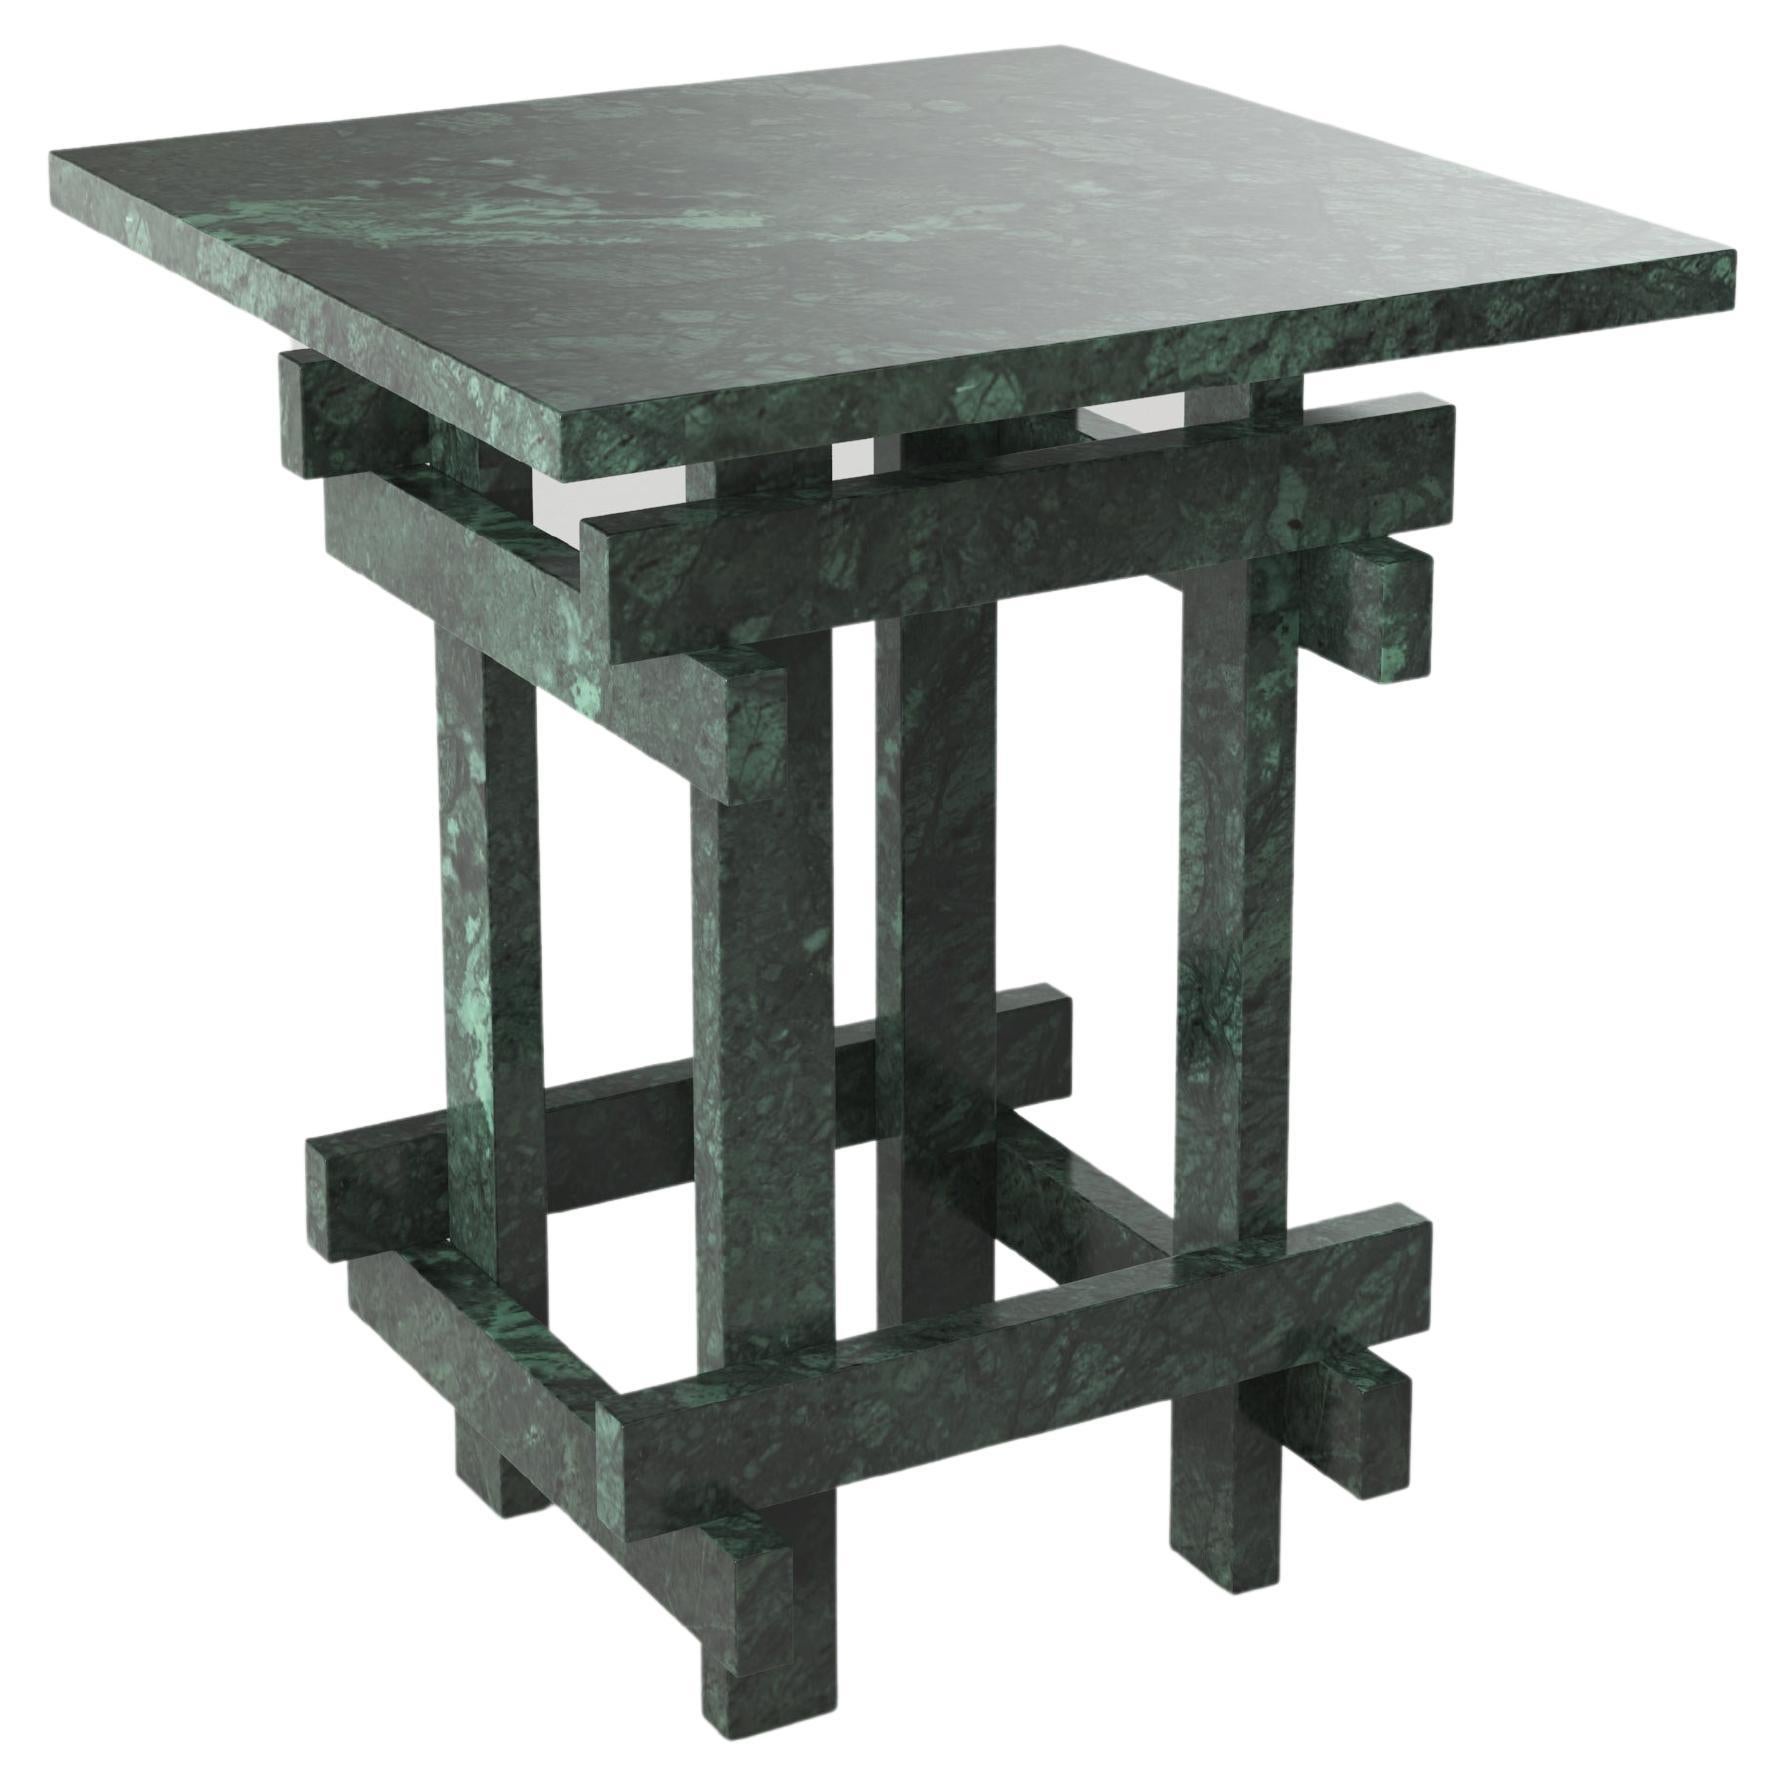 Contemporary LimitedEdition Green Marble Table, Paranoid V1 by Edizione Limitata